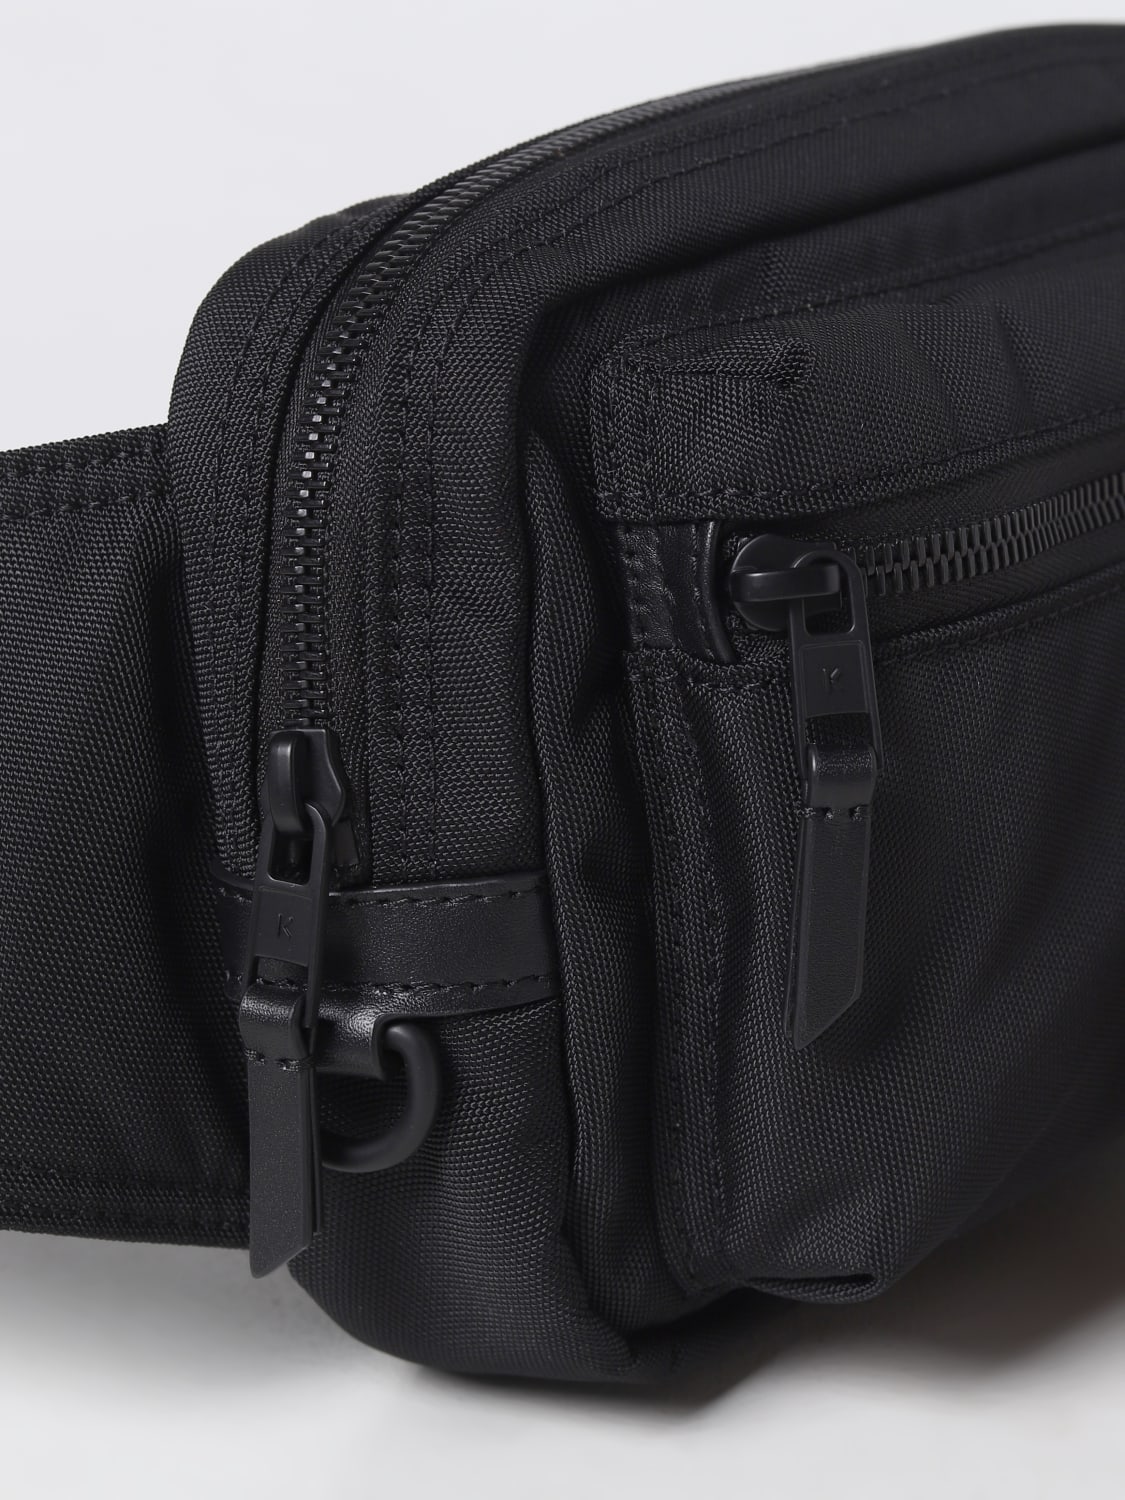 Kenzo Belt Bag Black